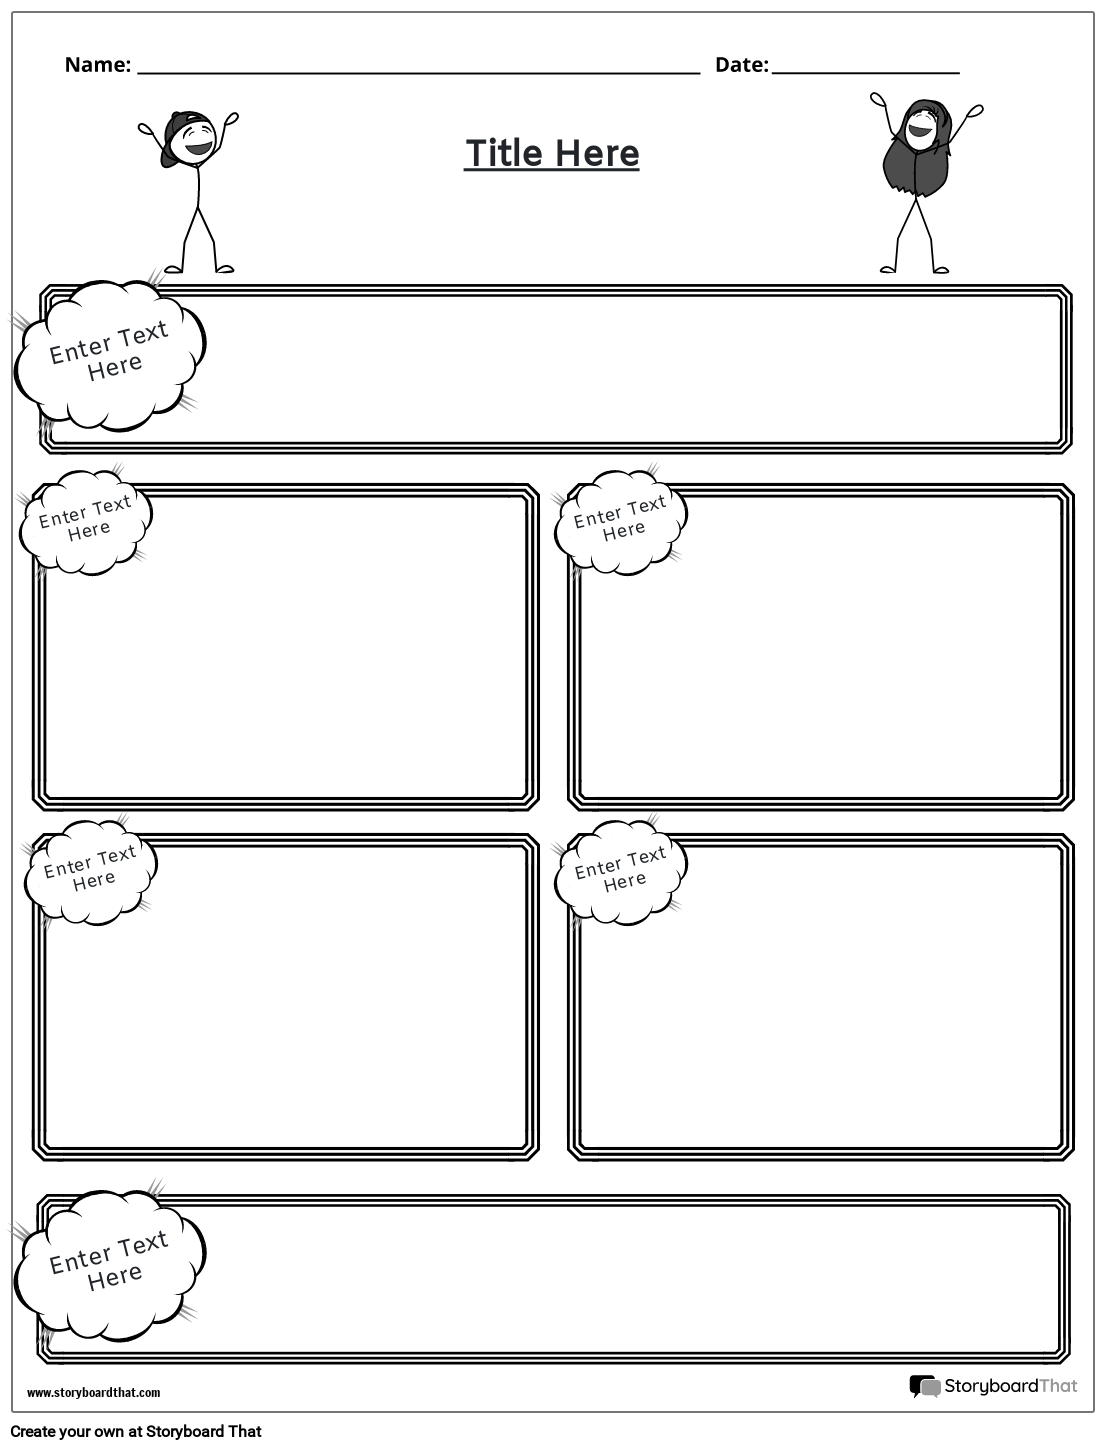 personal-narrative-digital-worksheet-storyboard